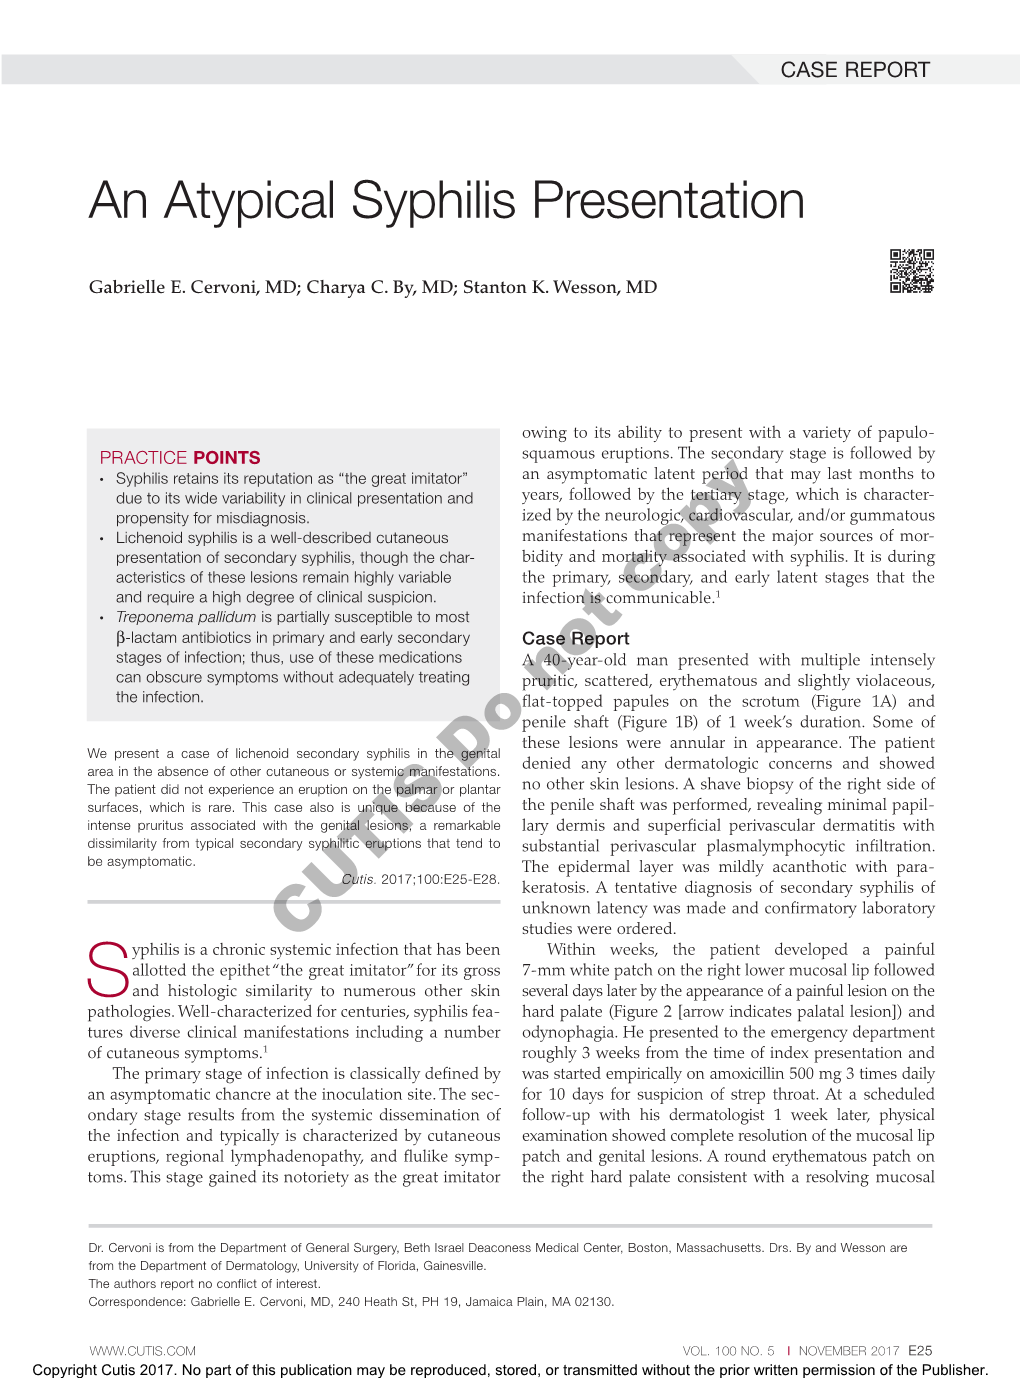 An Atypical Syphilis Presentation